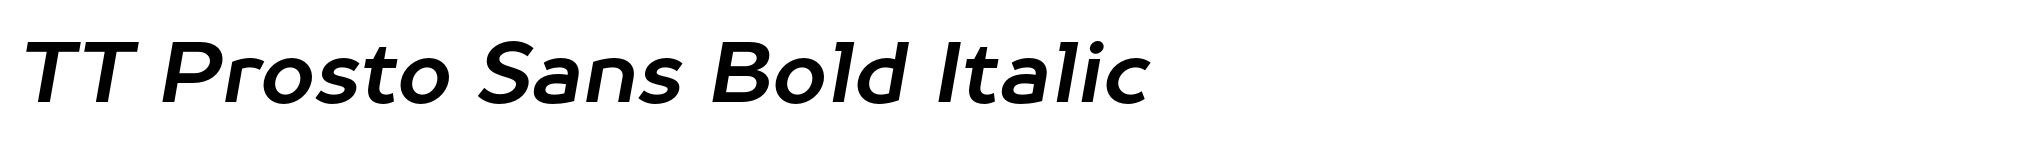 TT Prosto Sans Bold Italic image